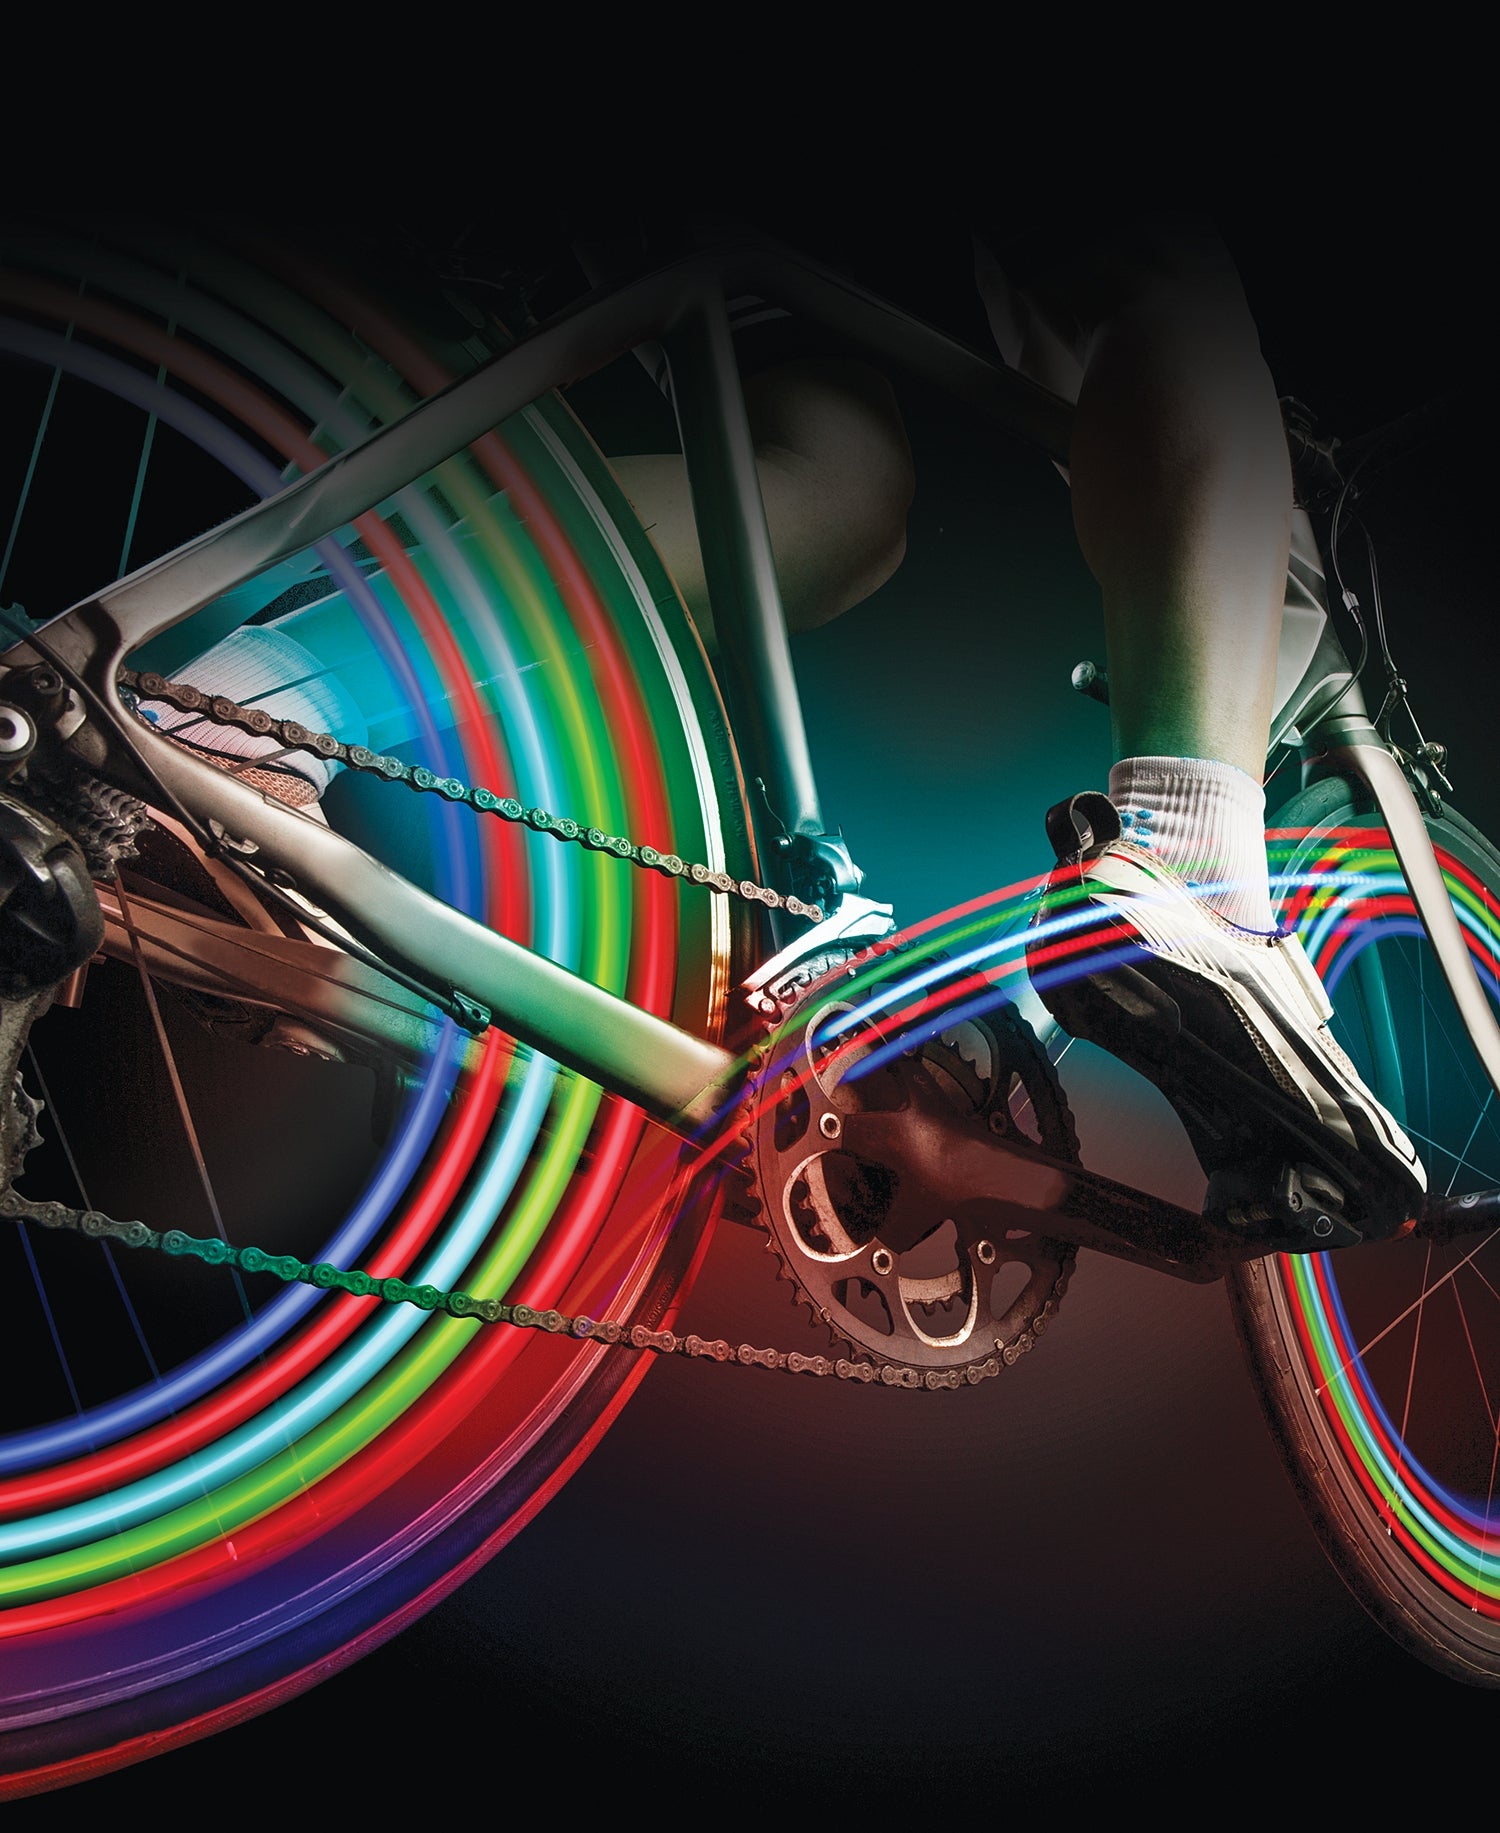 Protocol Tread Lightly Bicycle Tire Lights